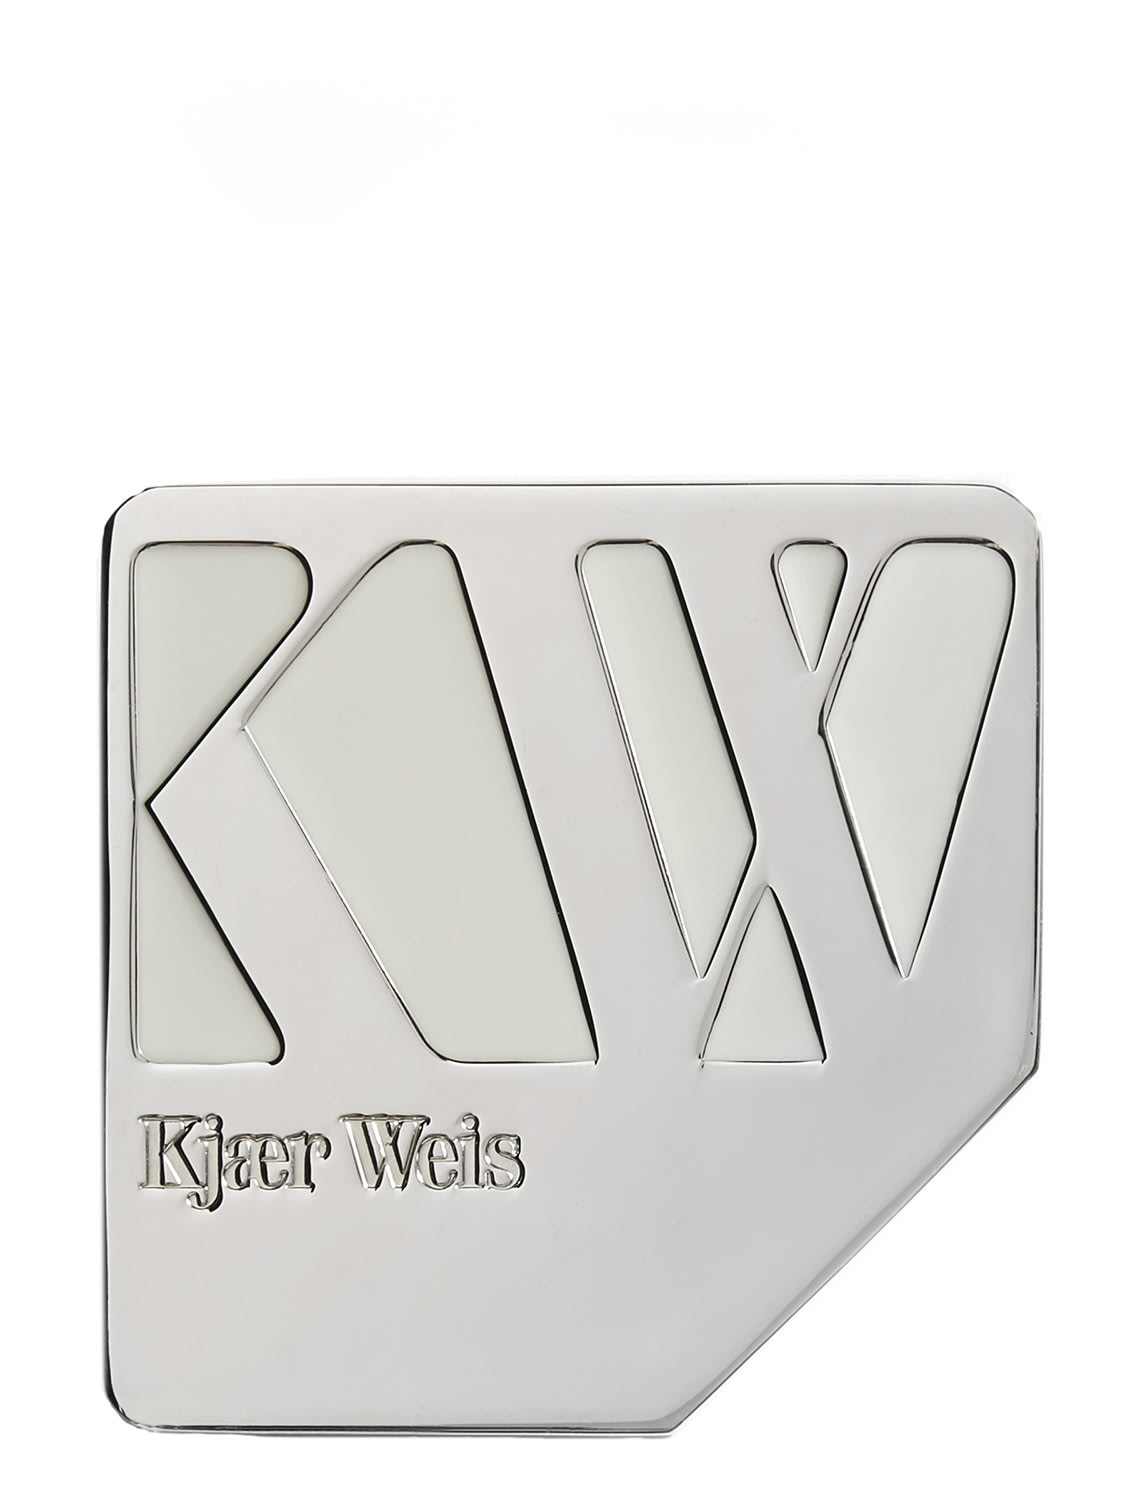  Kjaer Weis Cream Foundation 